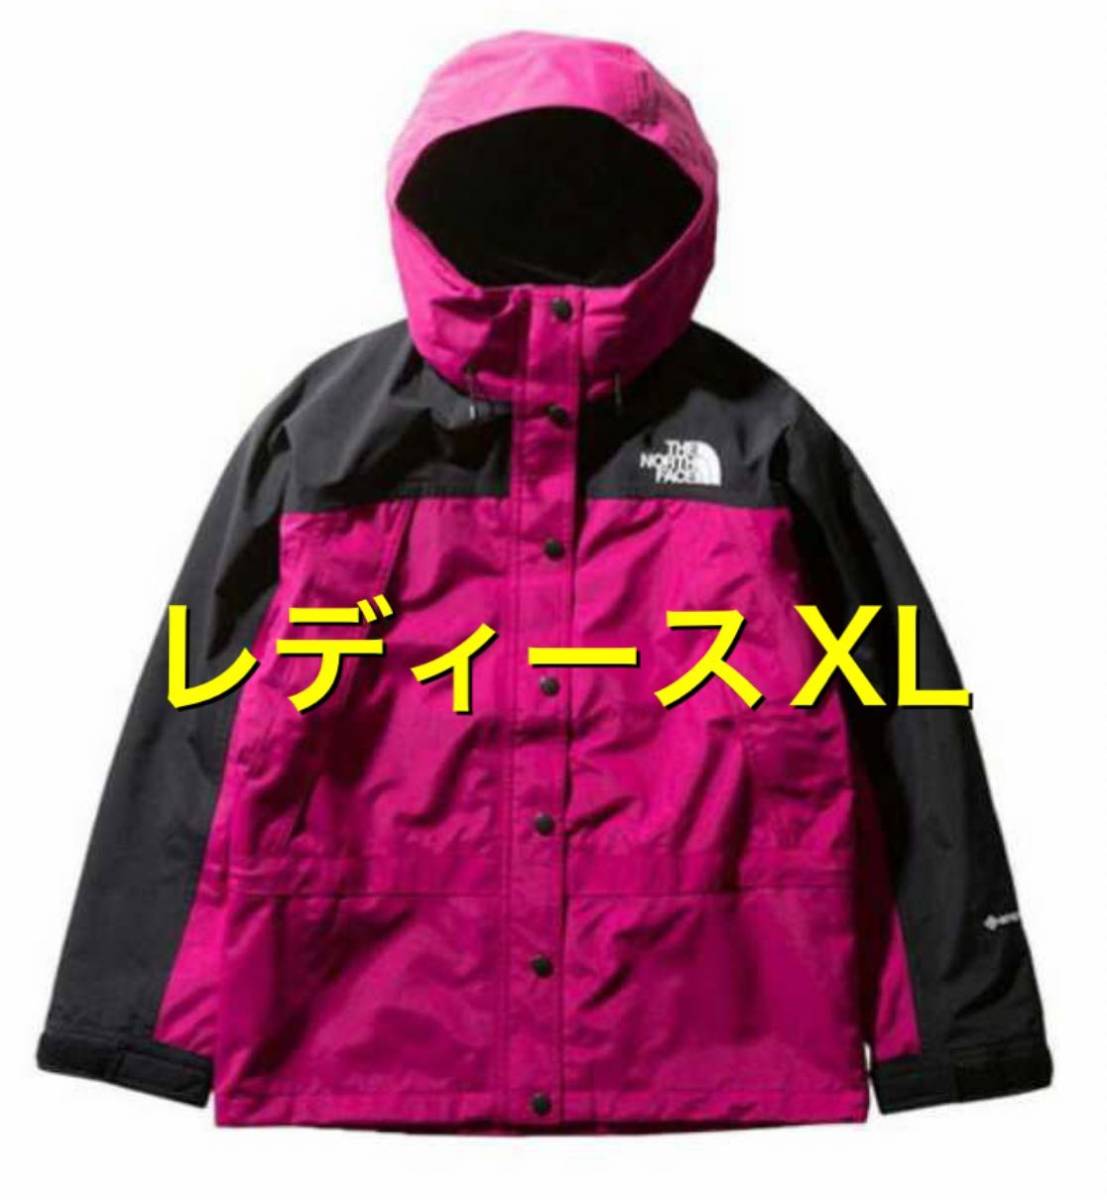 XLサイズ】 ザ ノースフェイス レディース Mountain Light Jacket